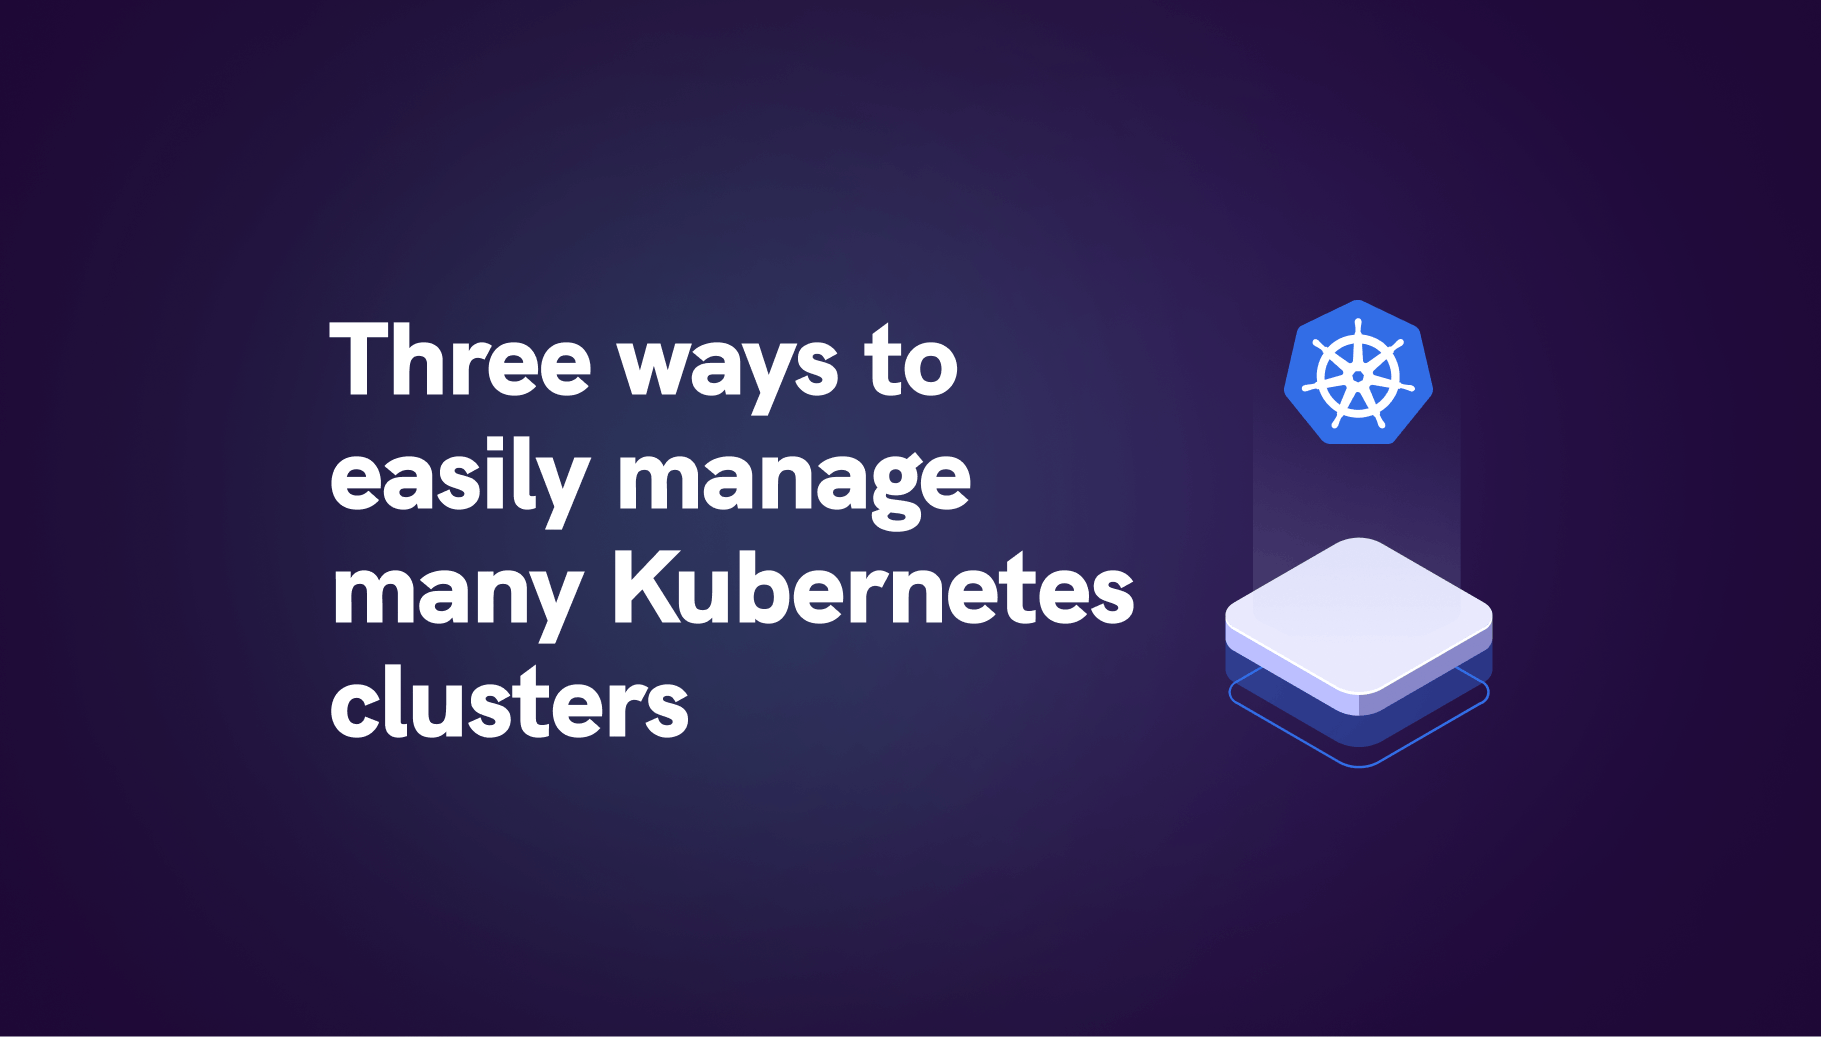 Three ways to easily manage many Kubernetes clusters